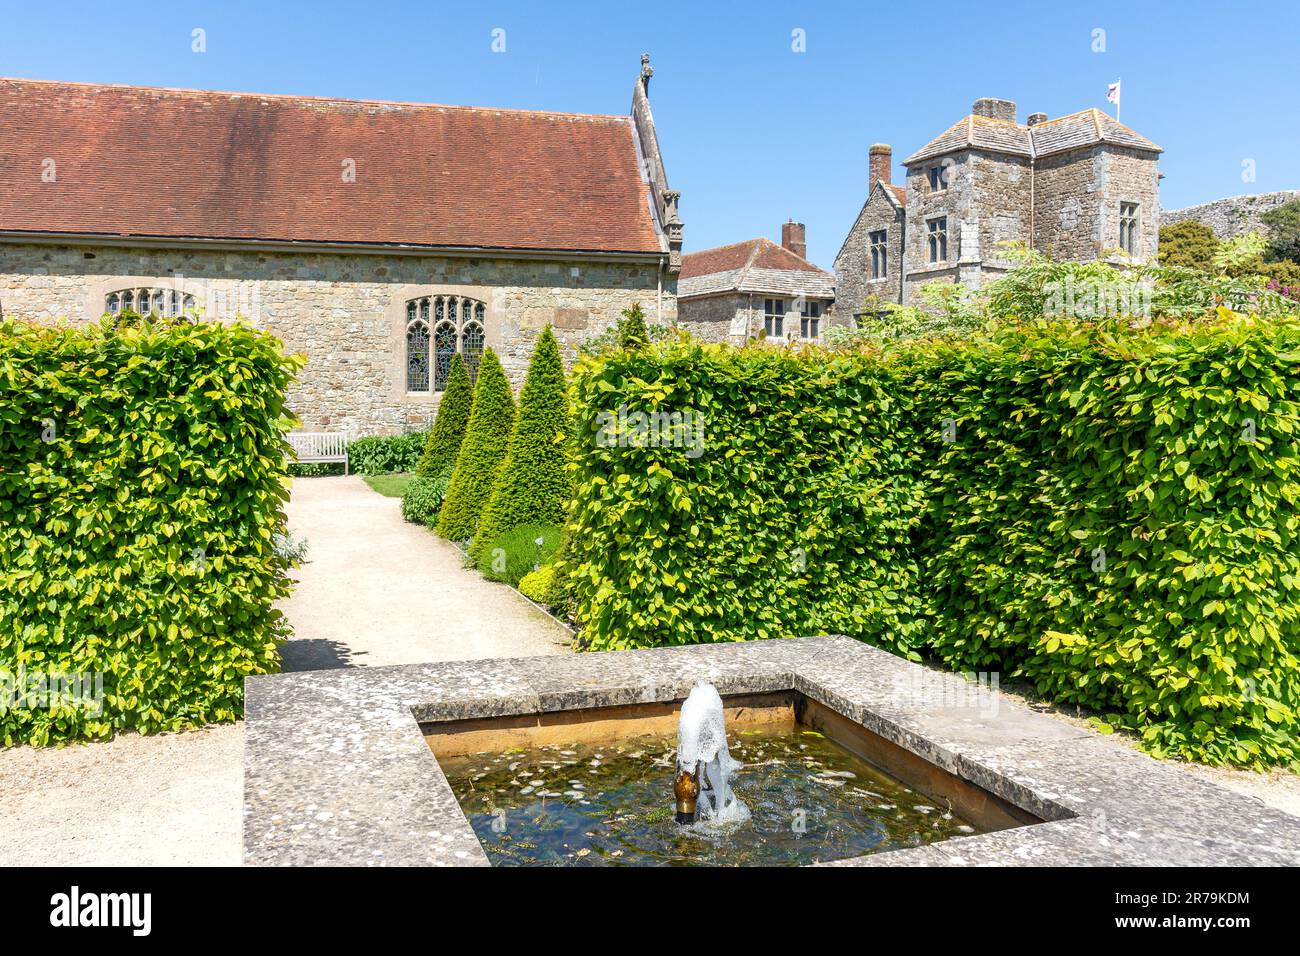 Jardin de la princesse Beatrice, Château de Carisbrooke, Carisbrooke, Île de Wight, Angleterre, Royaume-Uni Banque D'Images